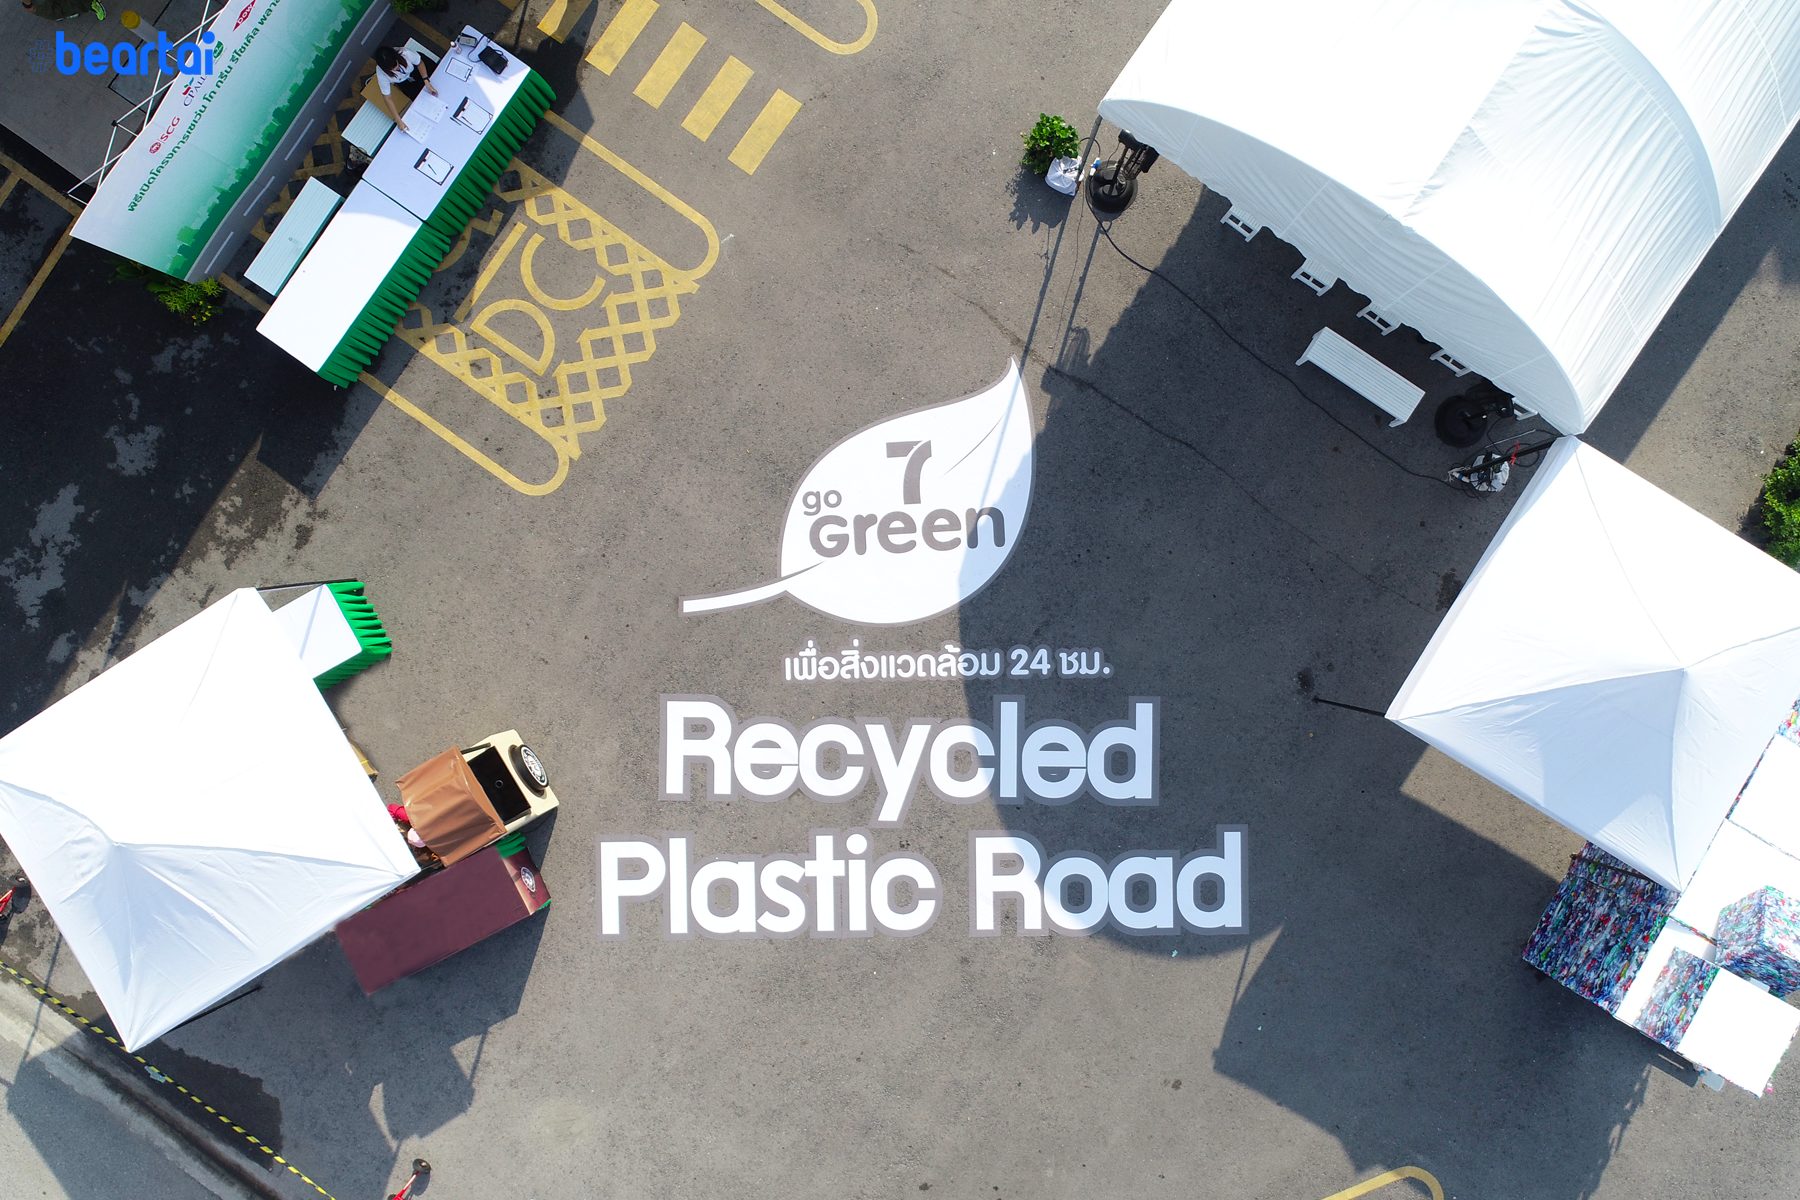 7 Go Green Recycled Plastic Road ‘ถนนจากพลาสติกใช้แล้ว’